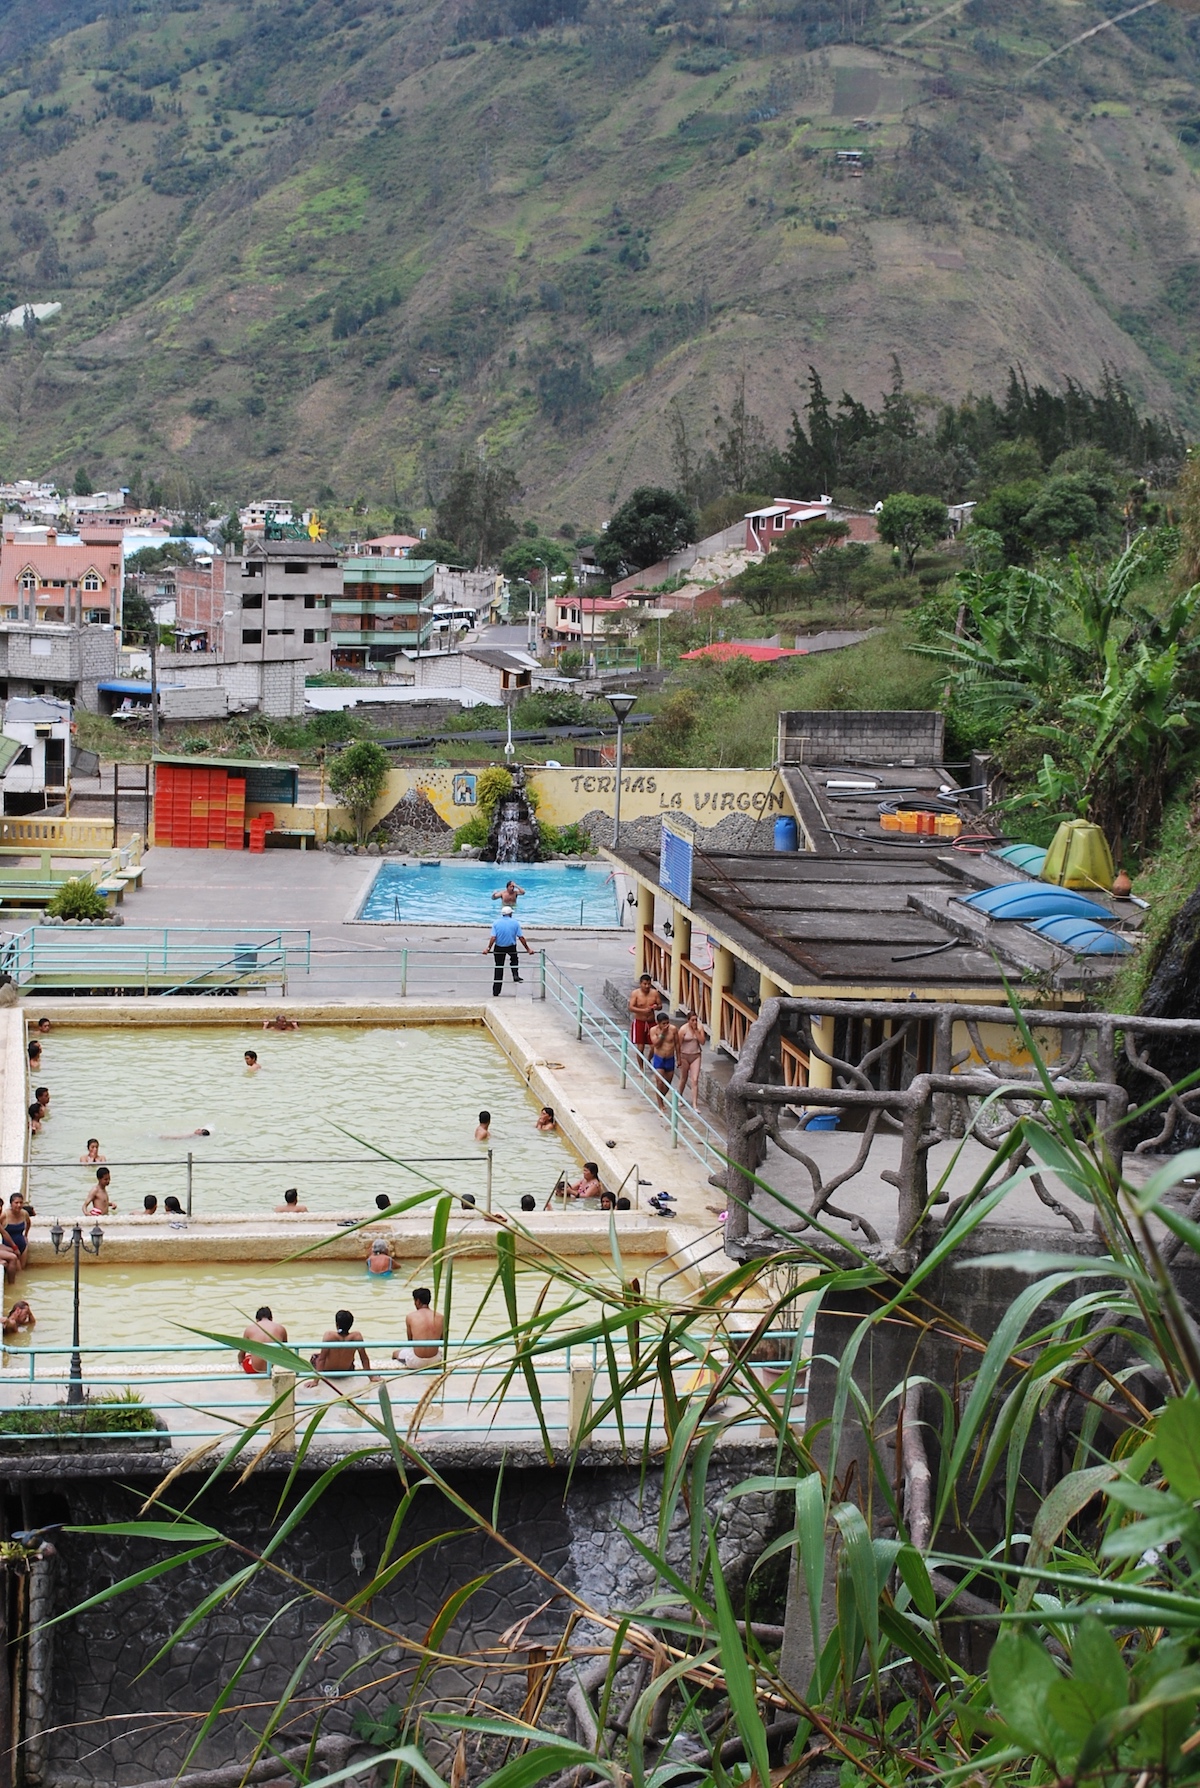 Thermal baths in Baños. Photo credit